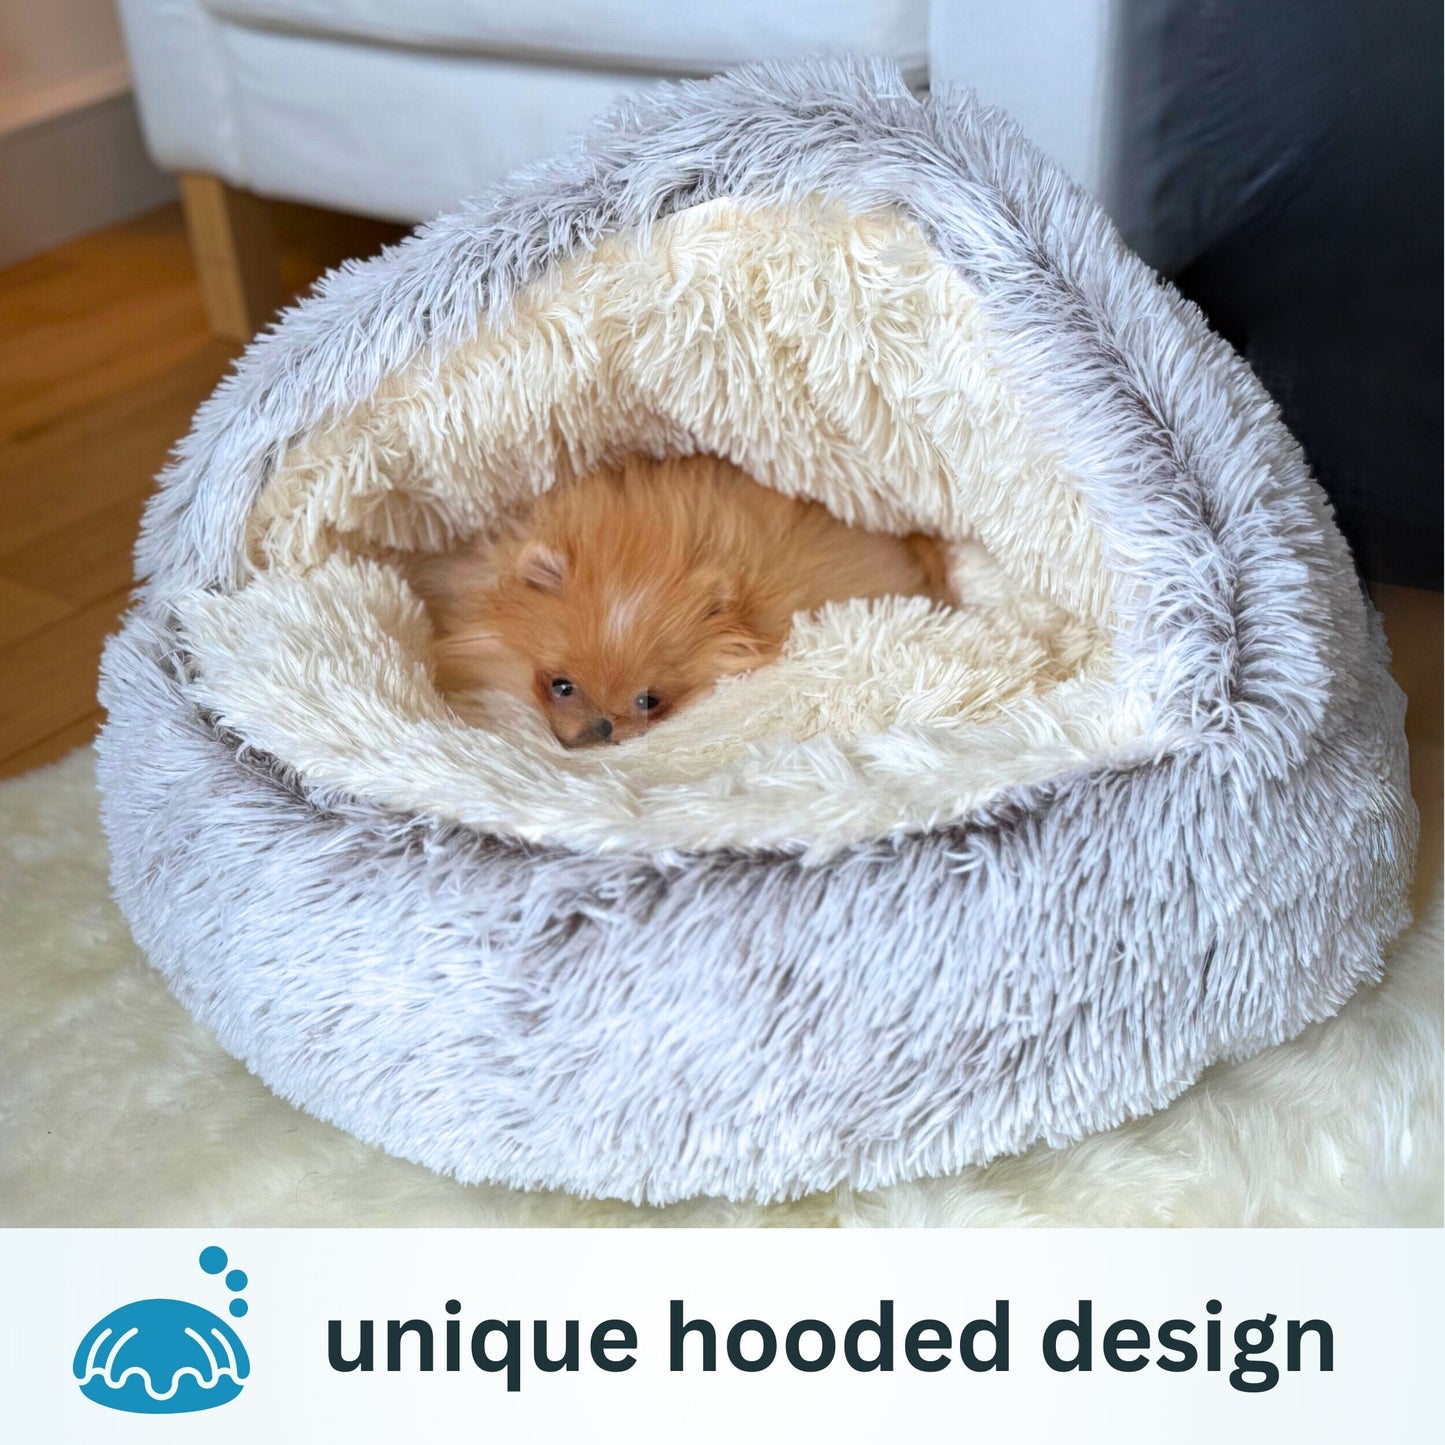 Cozy Cocoon Pet Bed